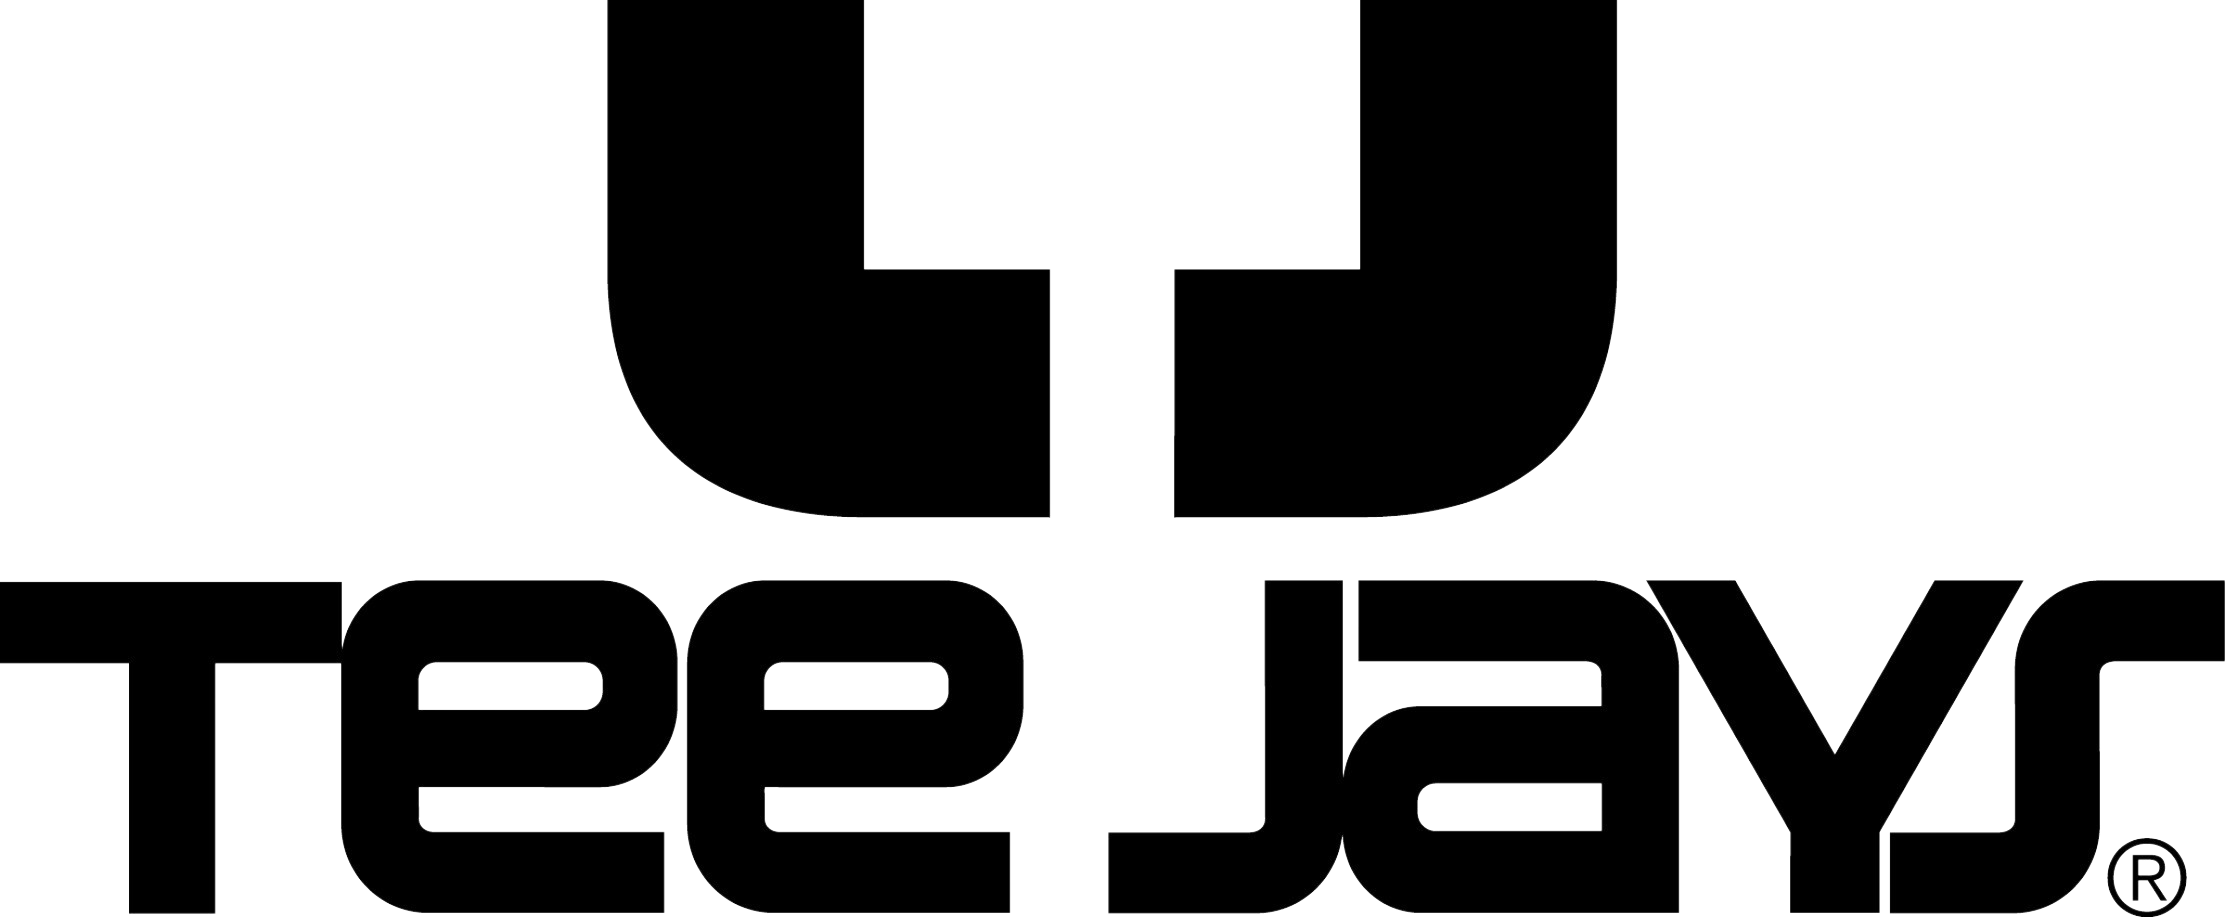 Tee Jays logo značky